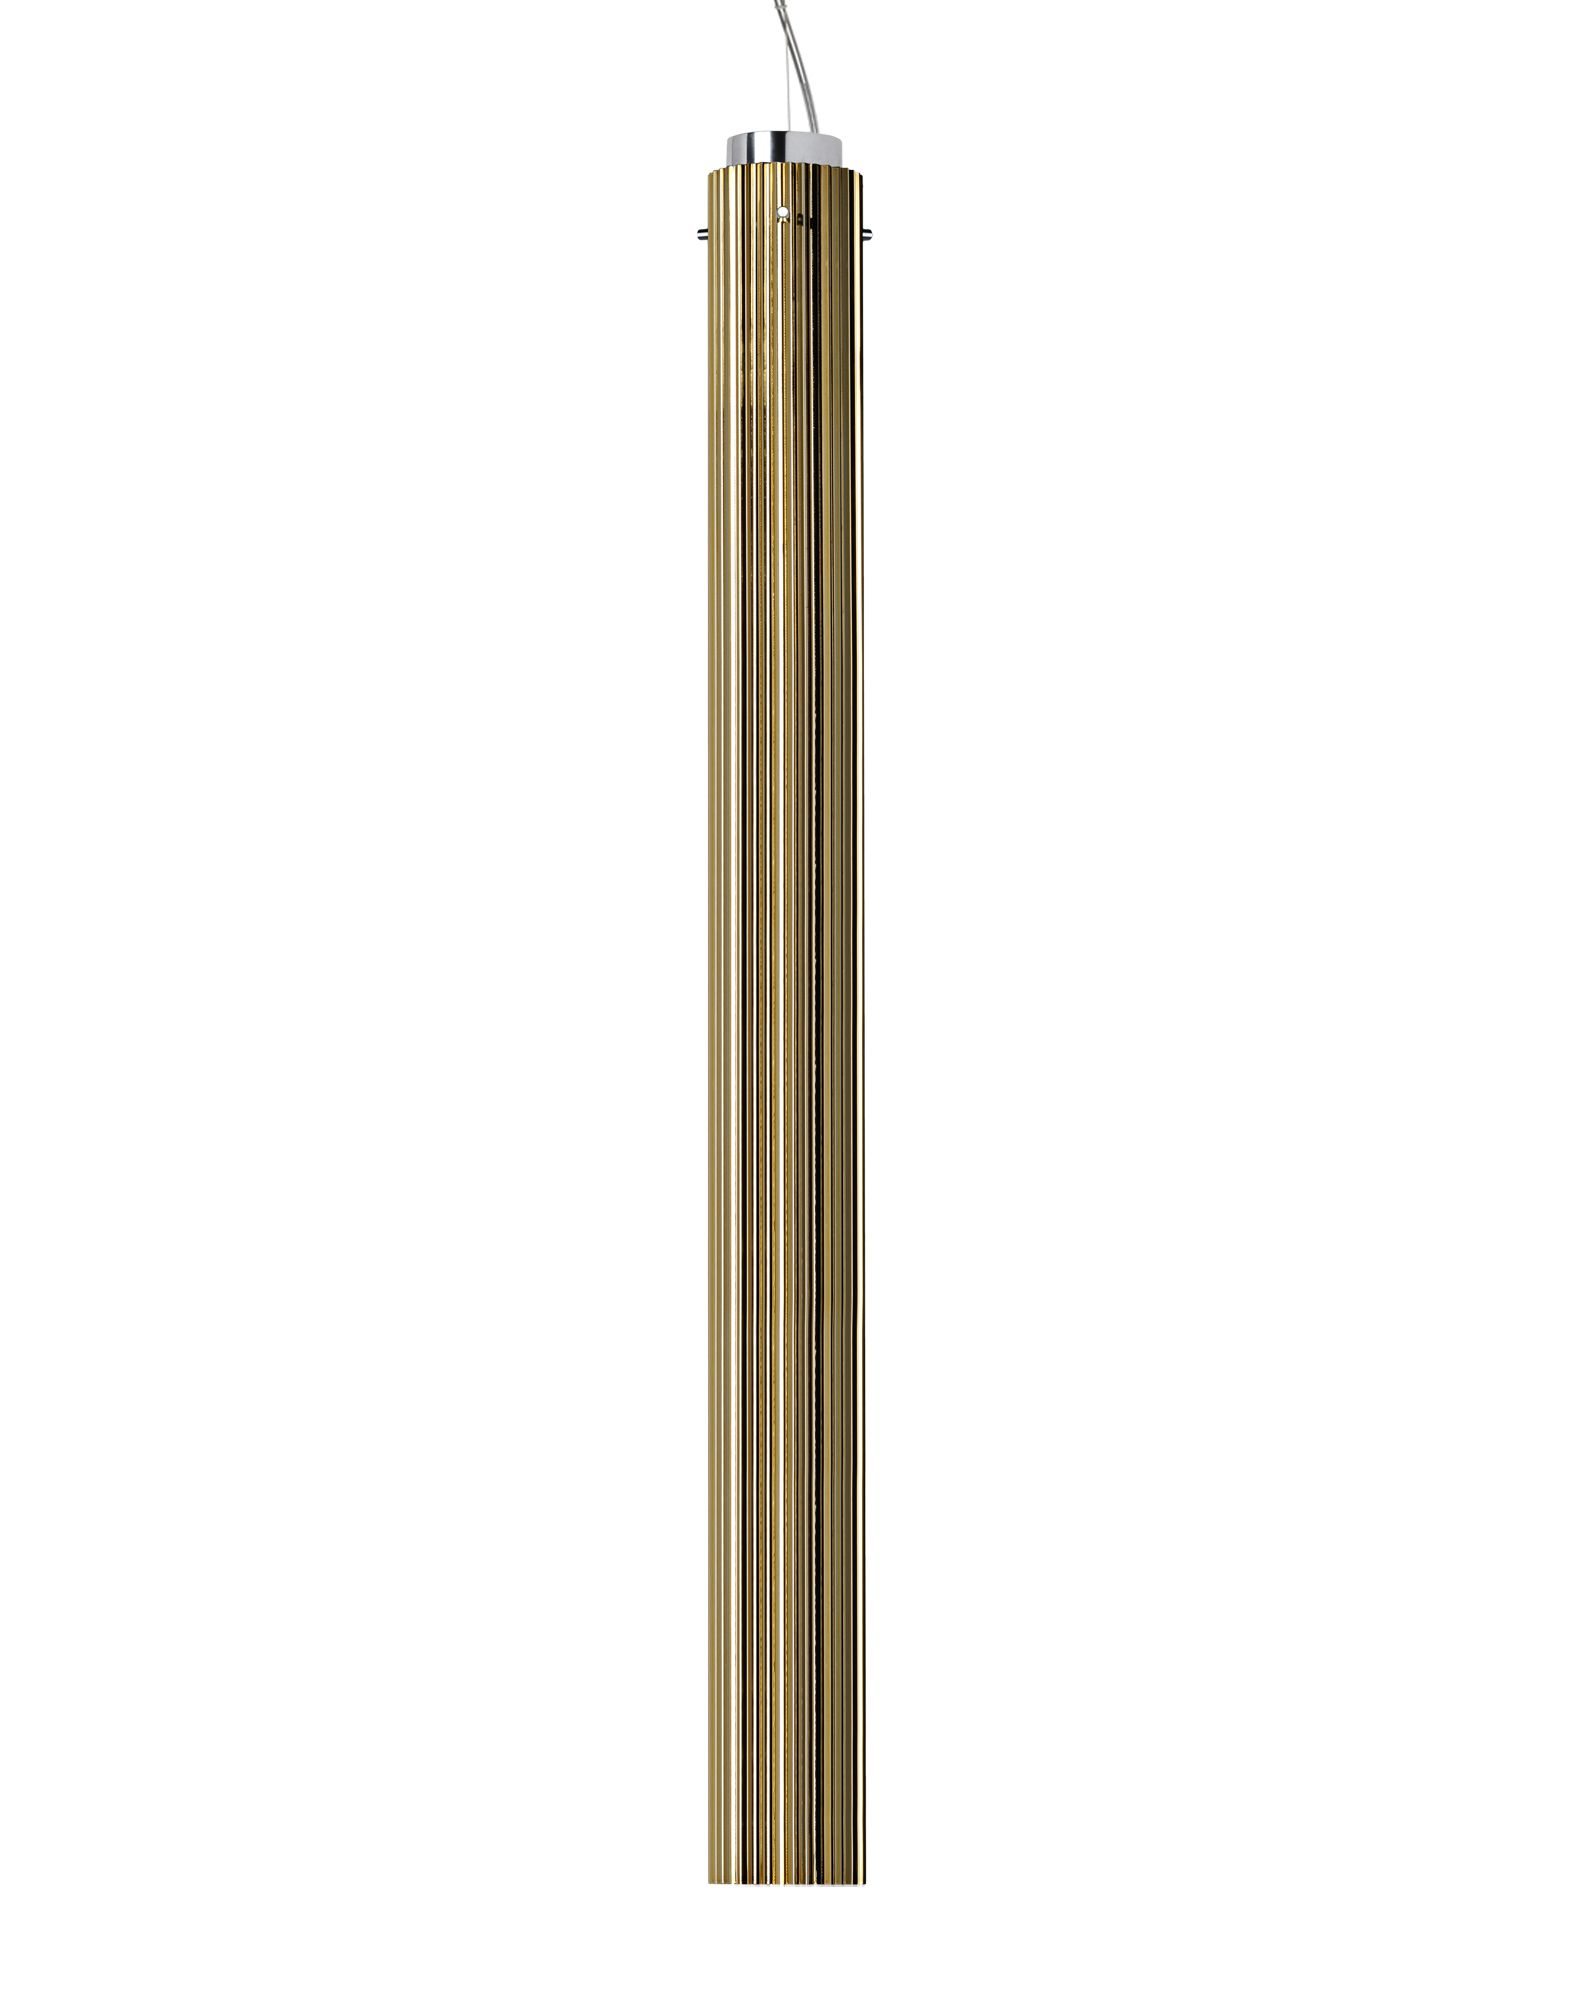 Suspensie Kartell by Laufen Rifly design Ludovica & Roberto Palomba LED 10W h90cm auriu metalizat 10W Decoratiuni